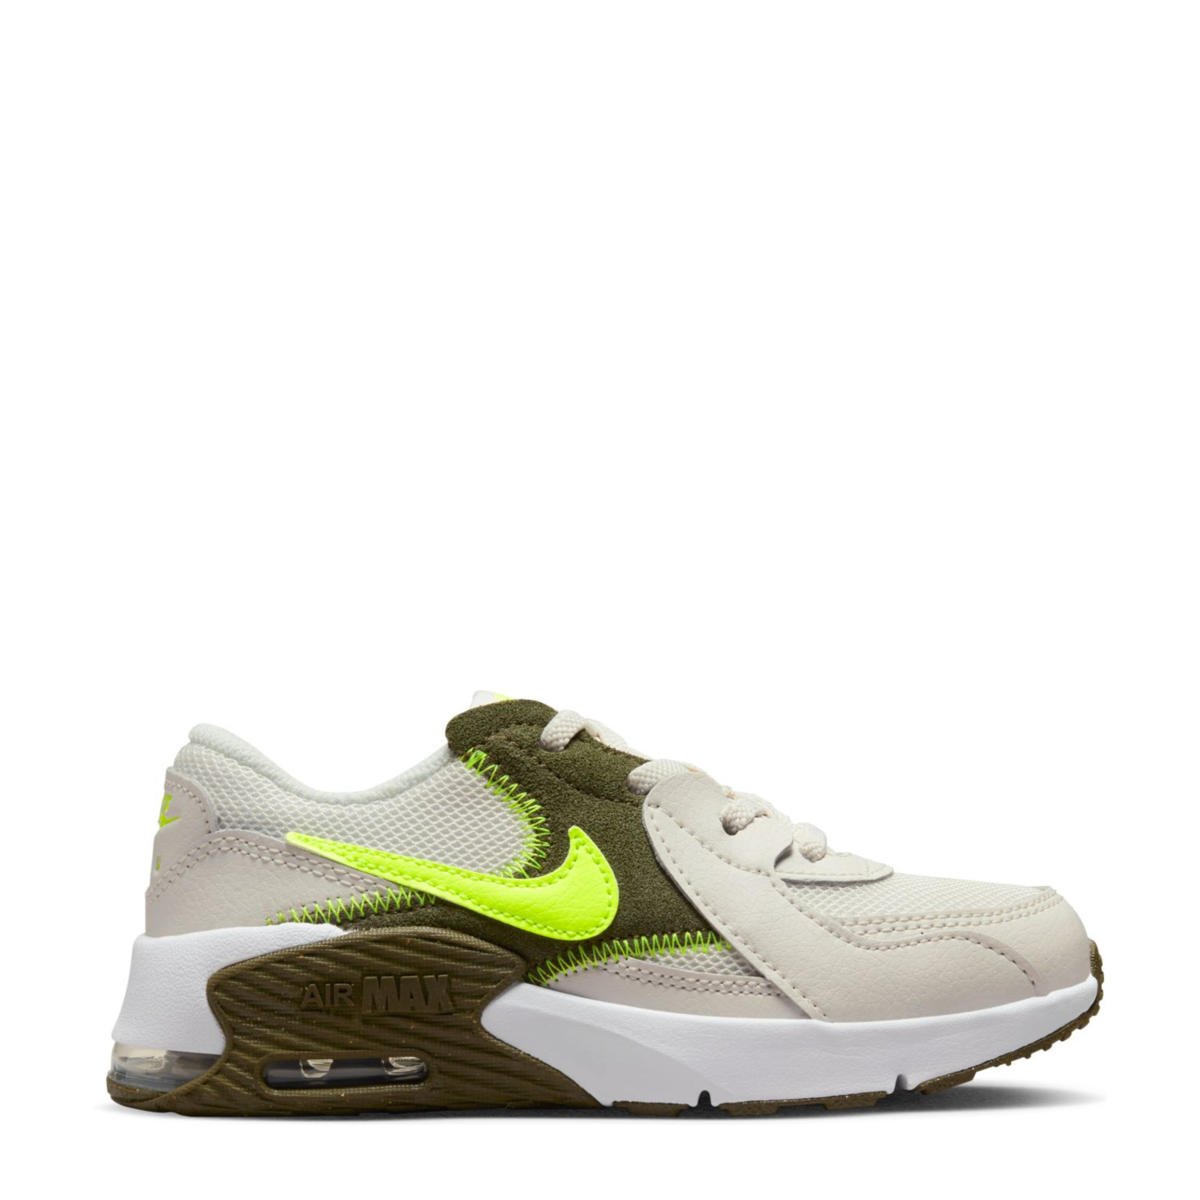 Inwoner Wasserette ventilator Nike Air Max Excee sneakers grijs/groen/wit | wehkamp